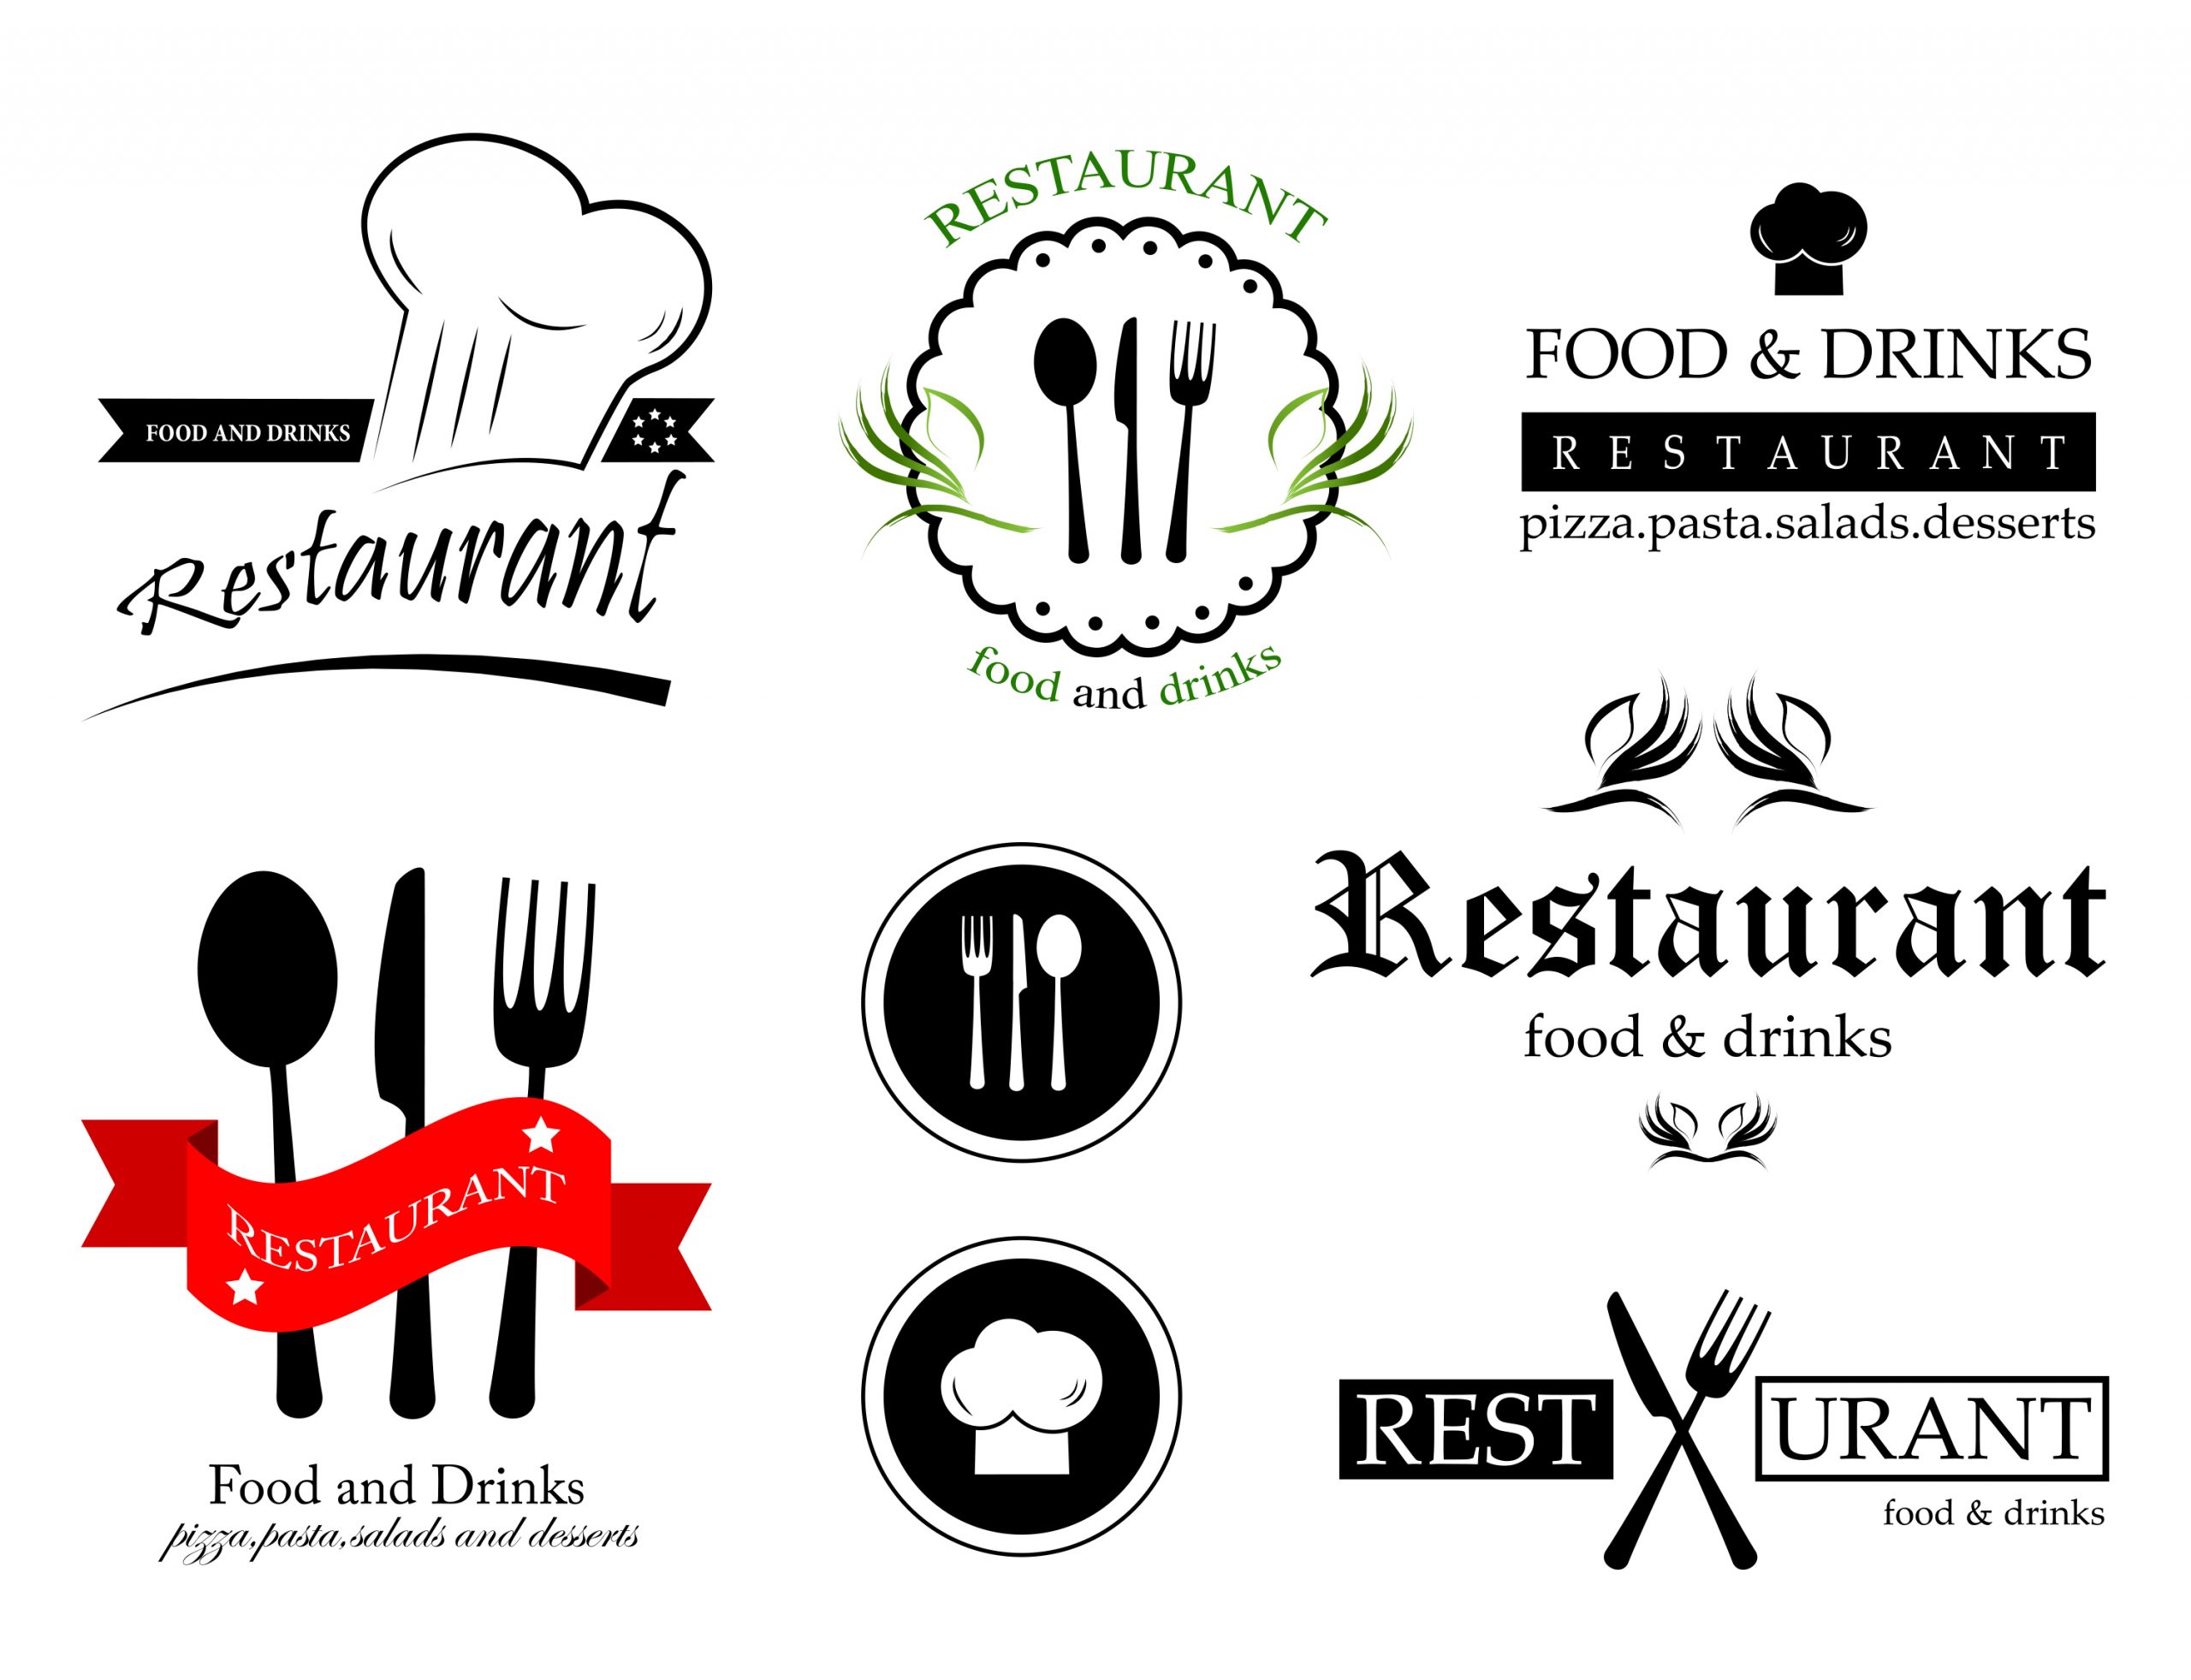 Best Ideas for Your Restaurant Logo Design